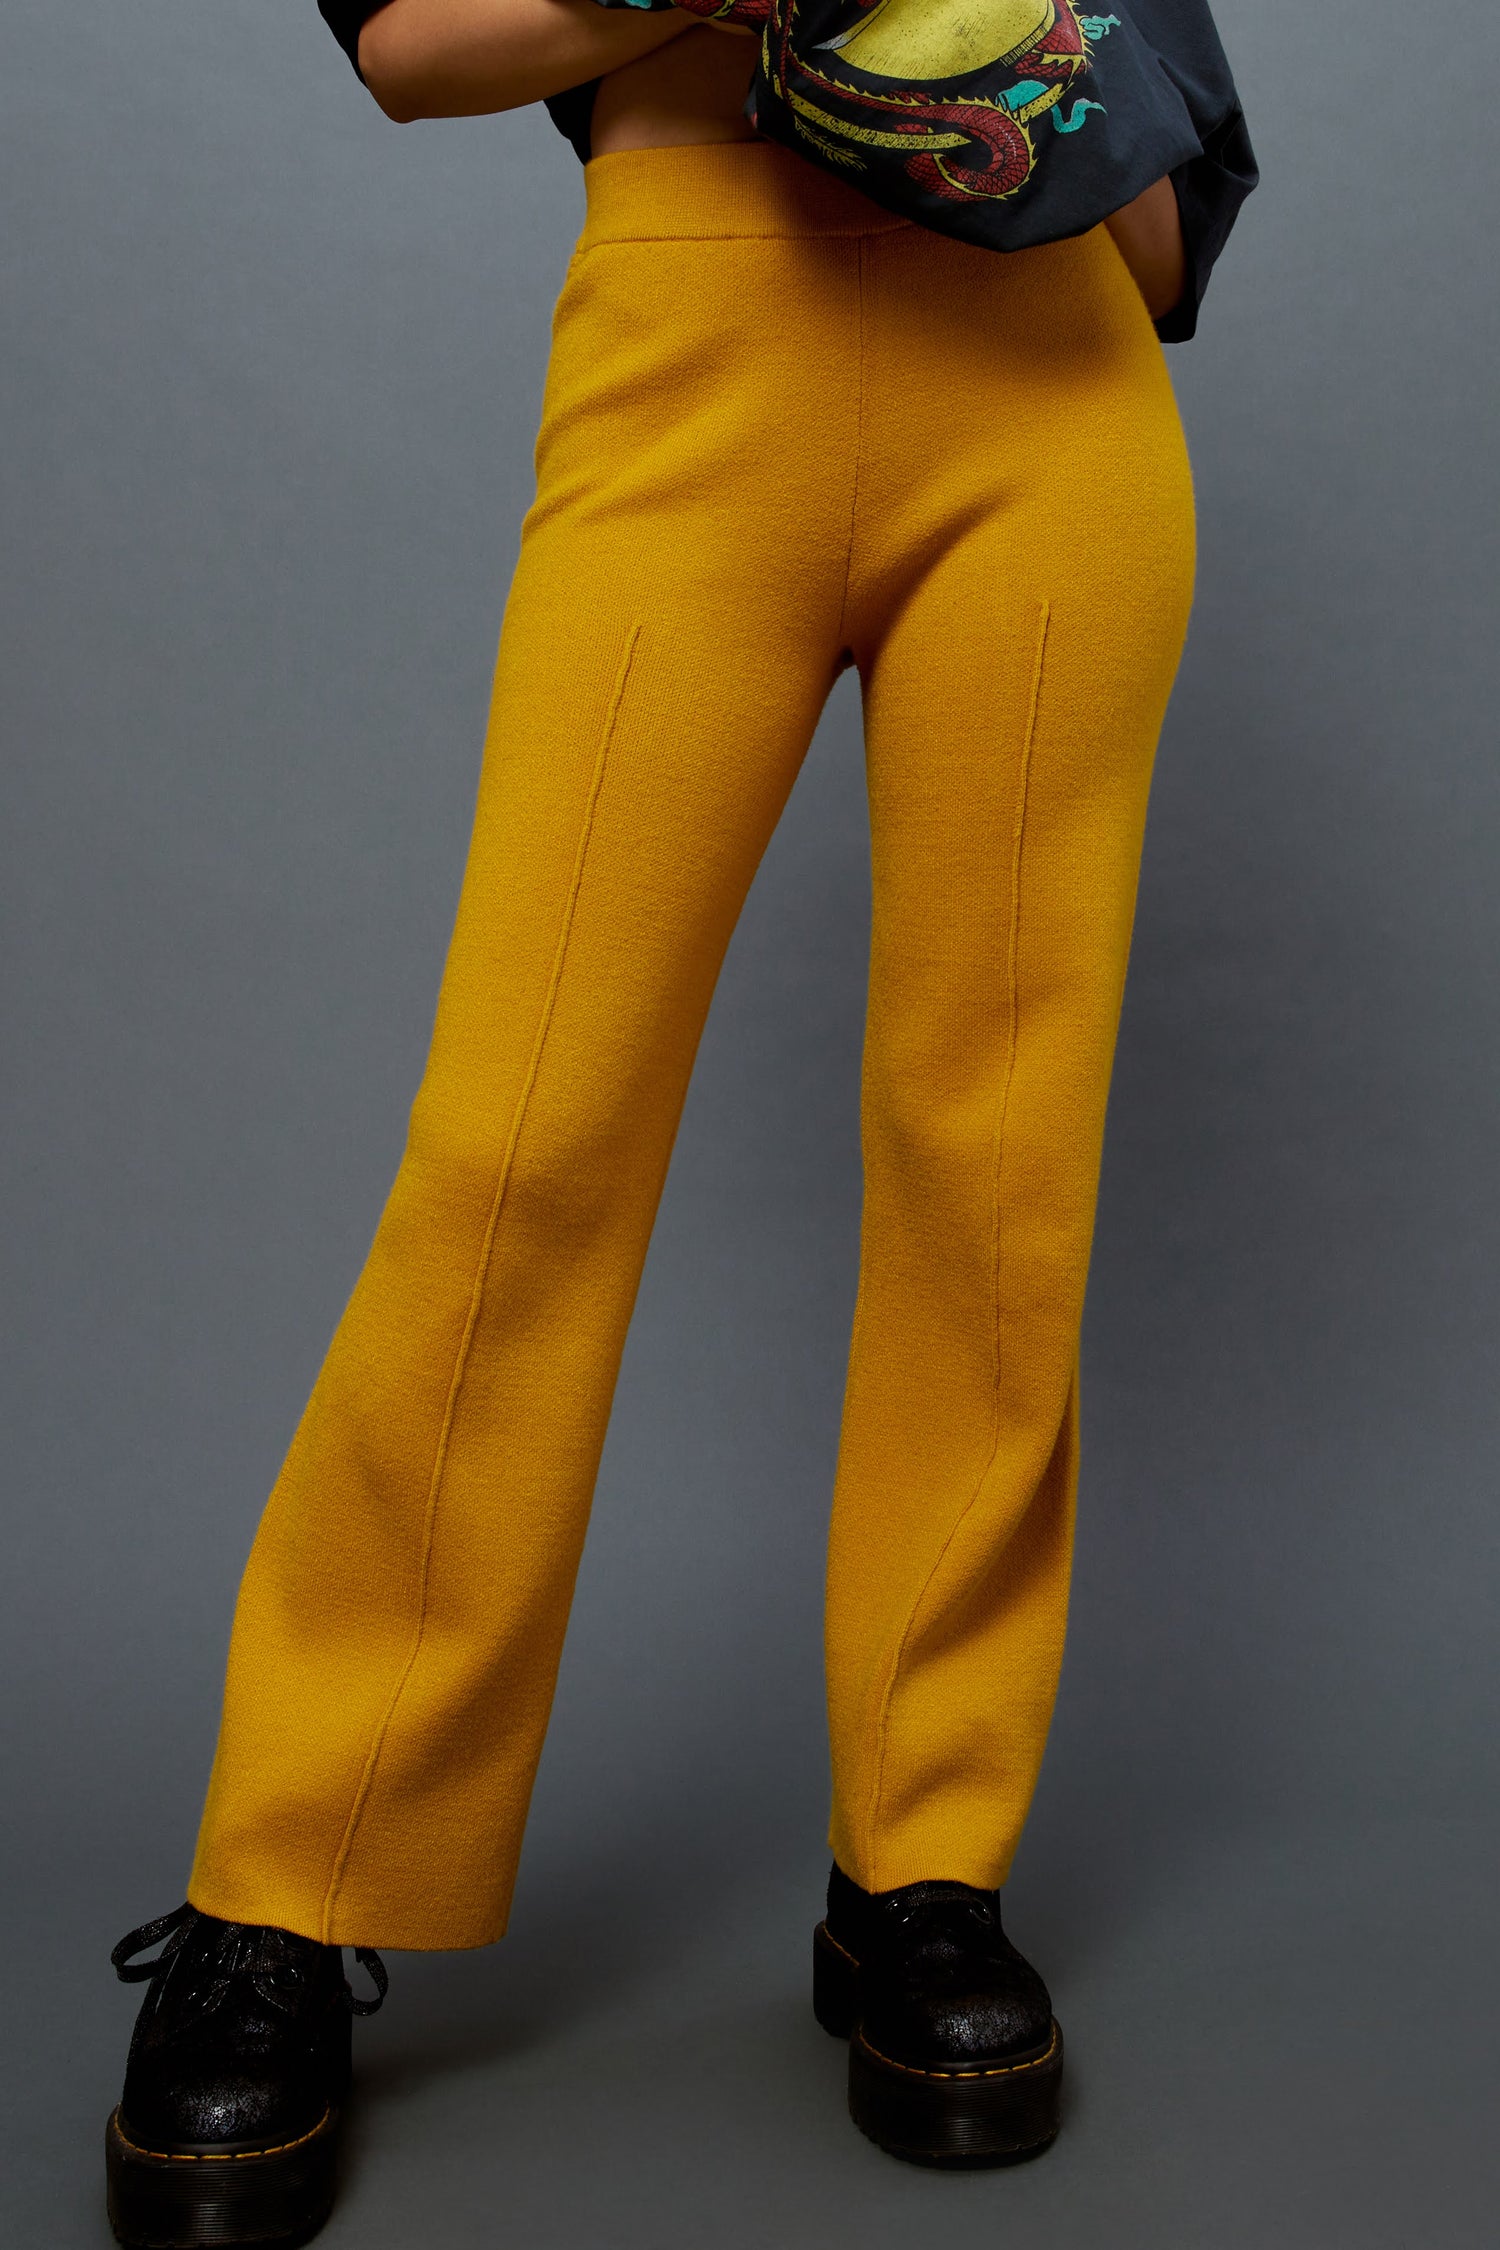 Model wearing knit pintuck pants in gold